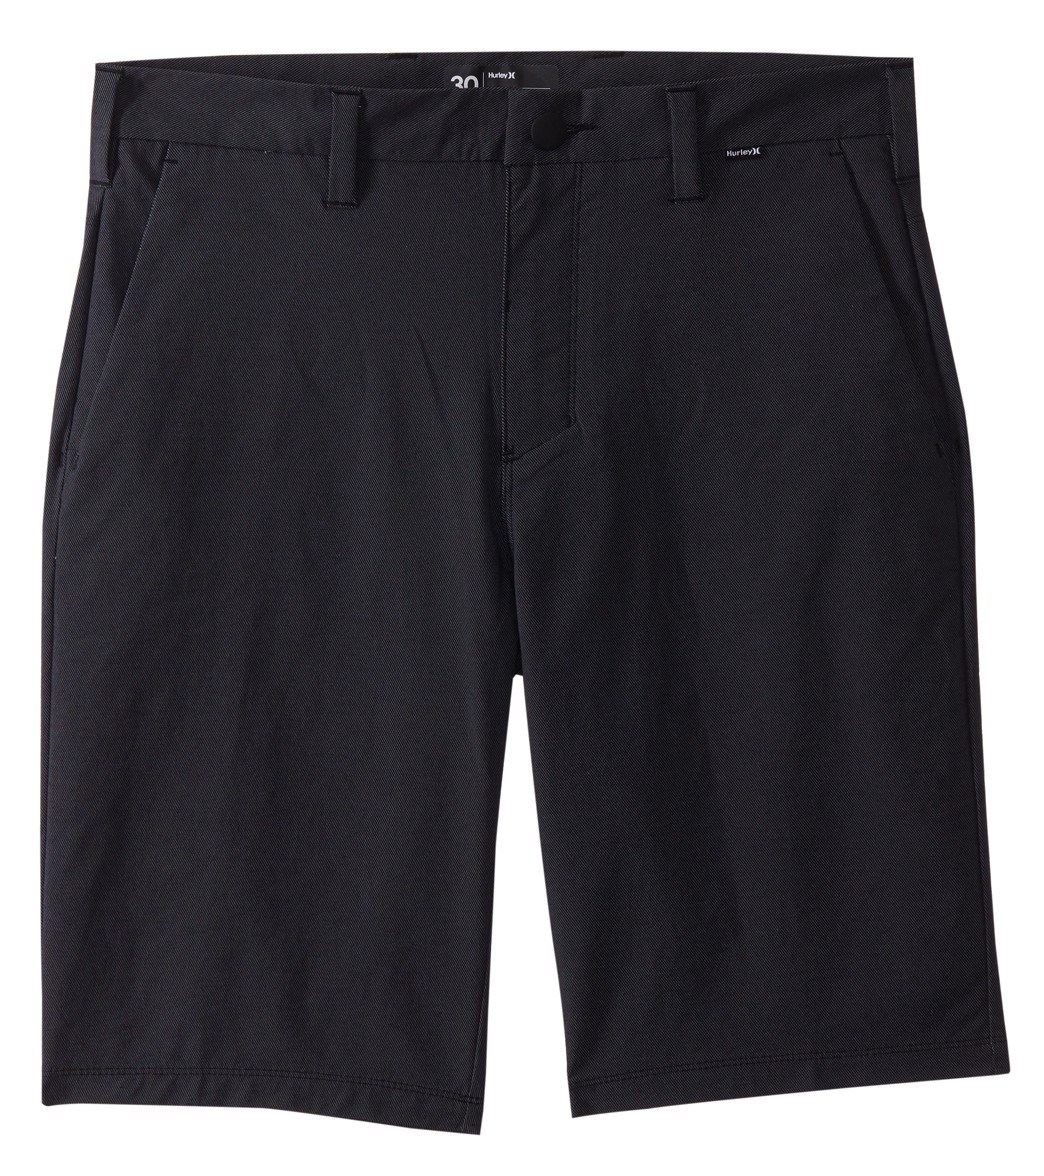 Hurley Men's Dri-Fit Chino 21 Walkshorts - Black 29 Nylon/Polyester/Spandex - Swimoutlet.com